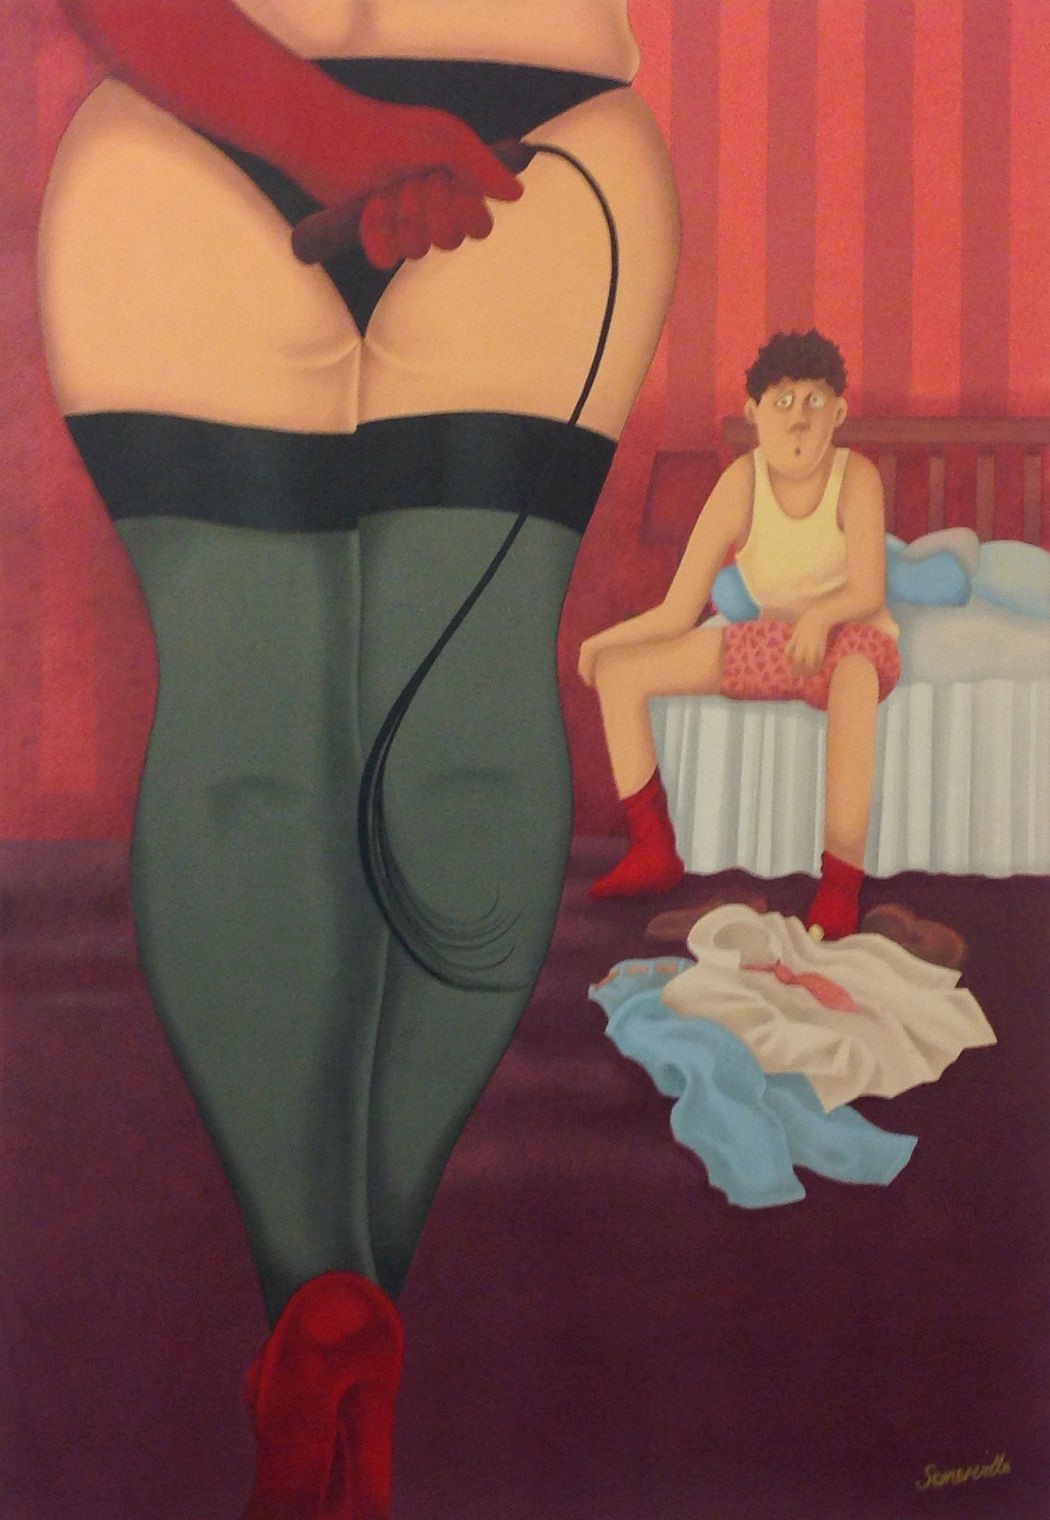 'Kiss, Kick or Torture' by artist Joan Somerville